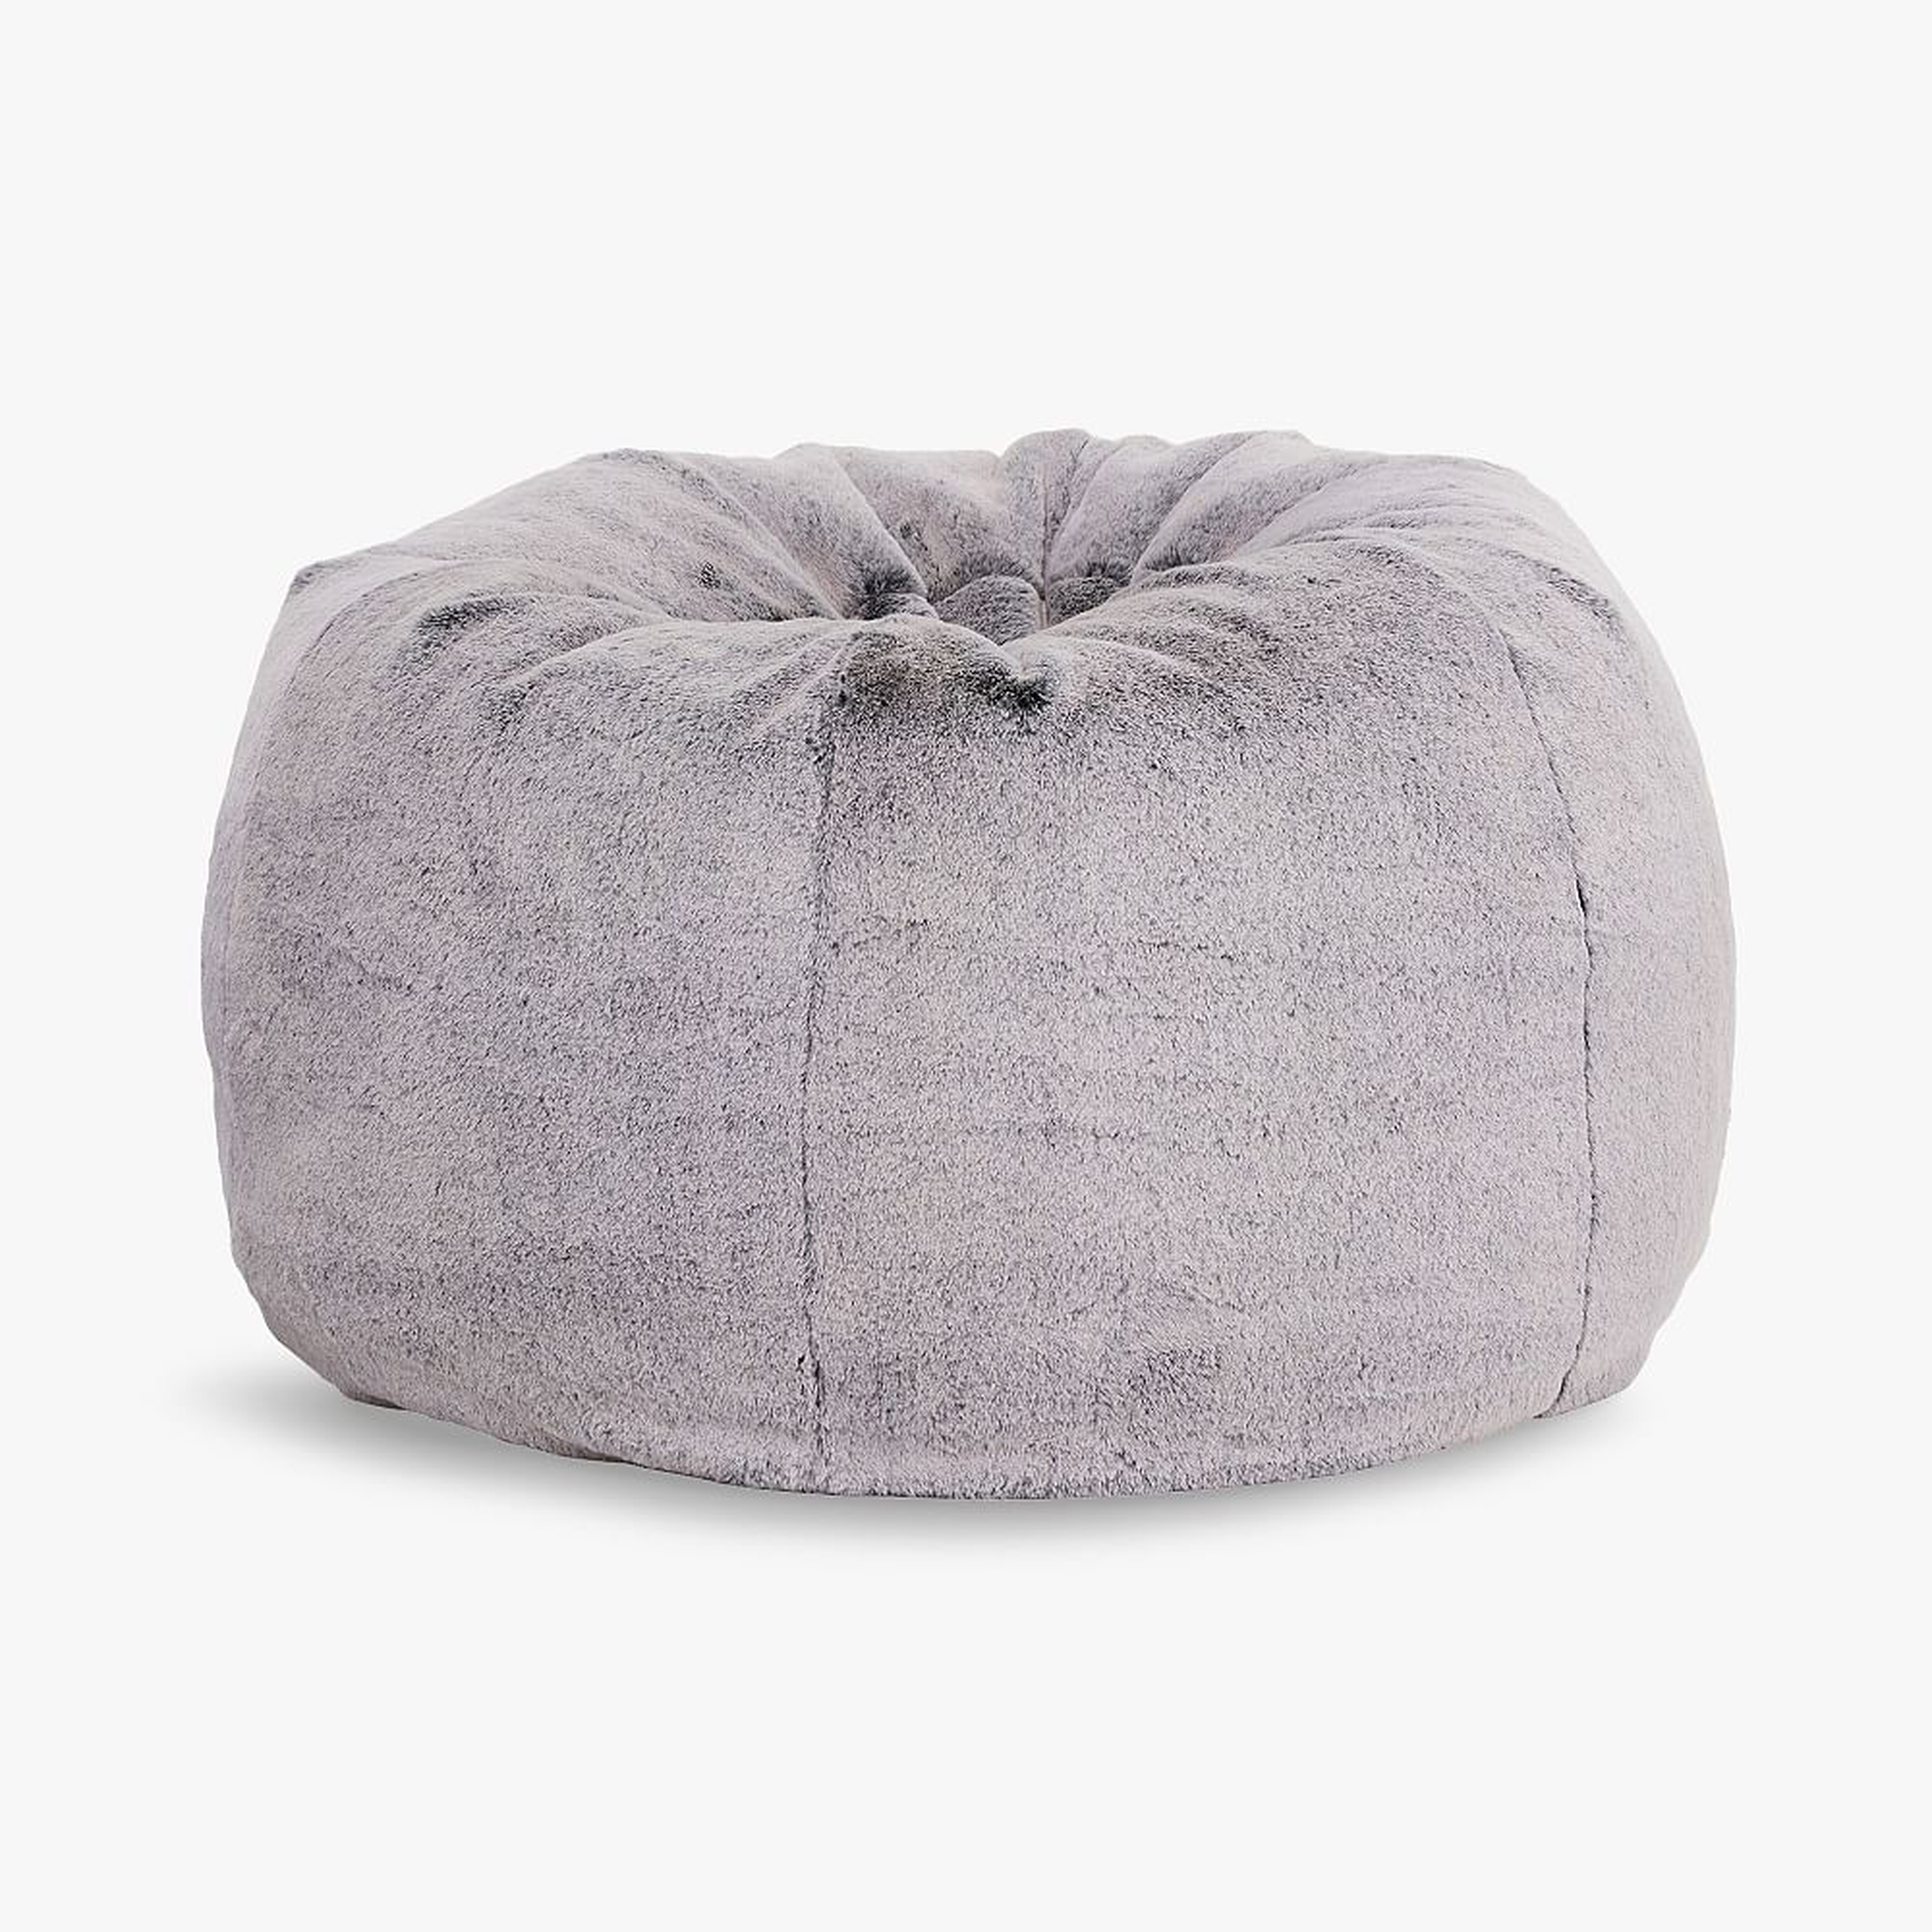 Chinchilla Faux-Fur Gray Bean Bag Chair Slipcover + Insert, Large - Pottery Barn Teen